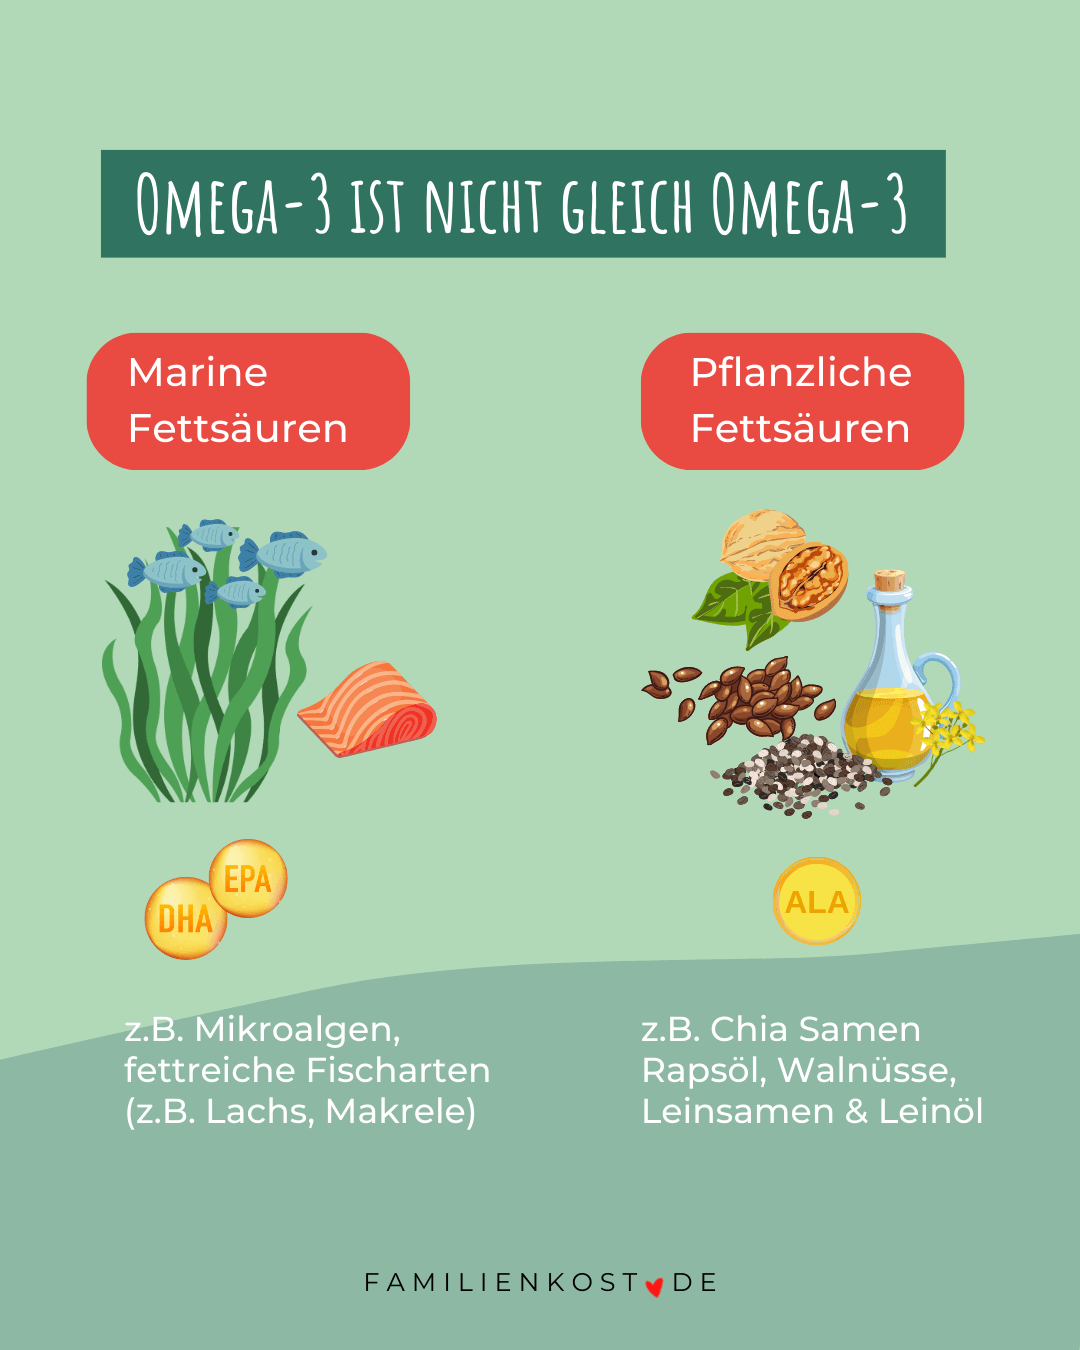 Omega-3 ist nicht gleich Omega-3